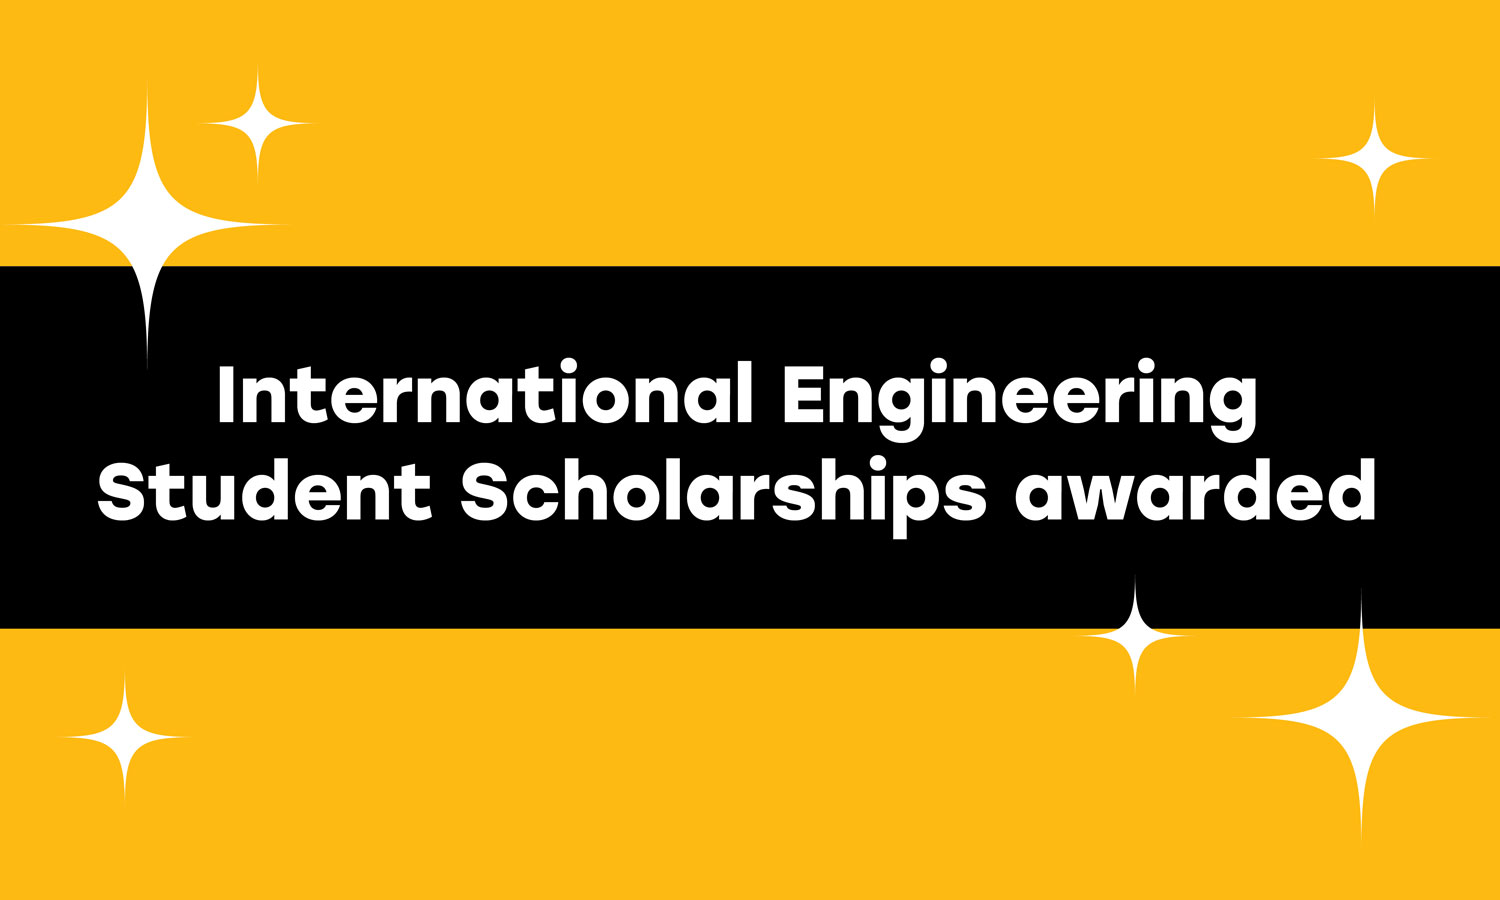 International Engineering Student Scholarships awarded